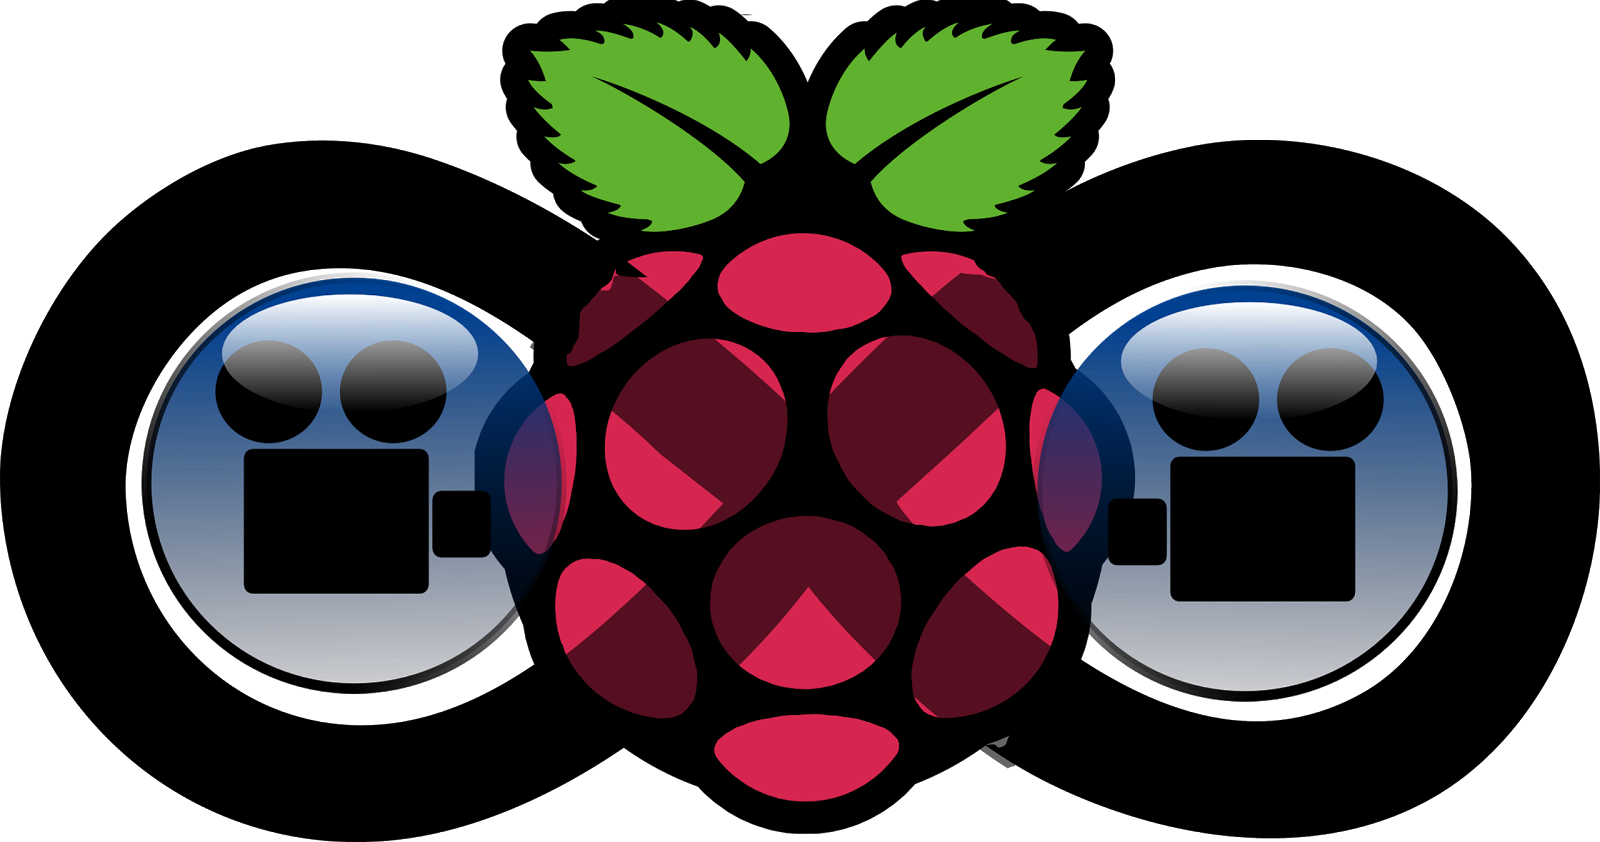 For Help You Can Post On The Raspberry Pi Subreddit - Raspberry Pi 3 Video Looper (1600x842)